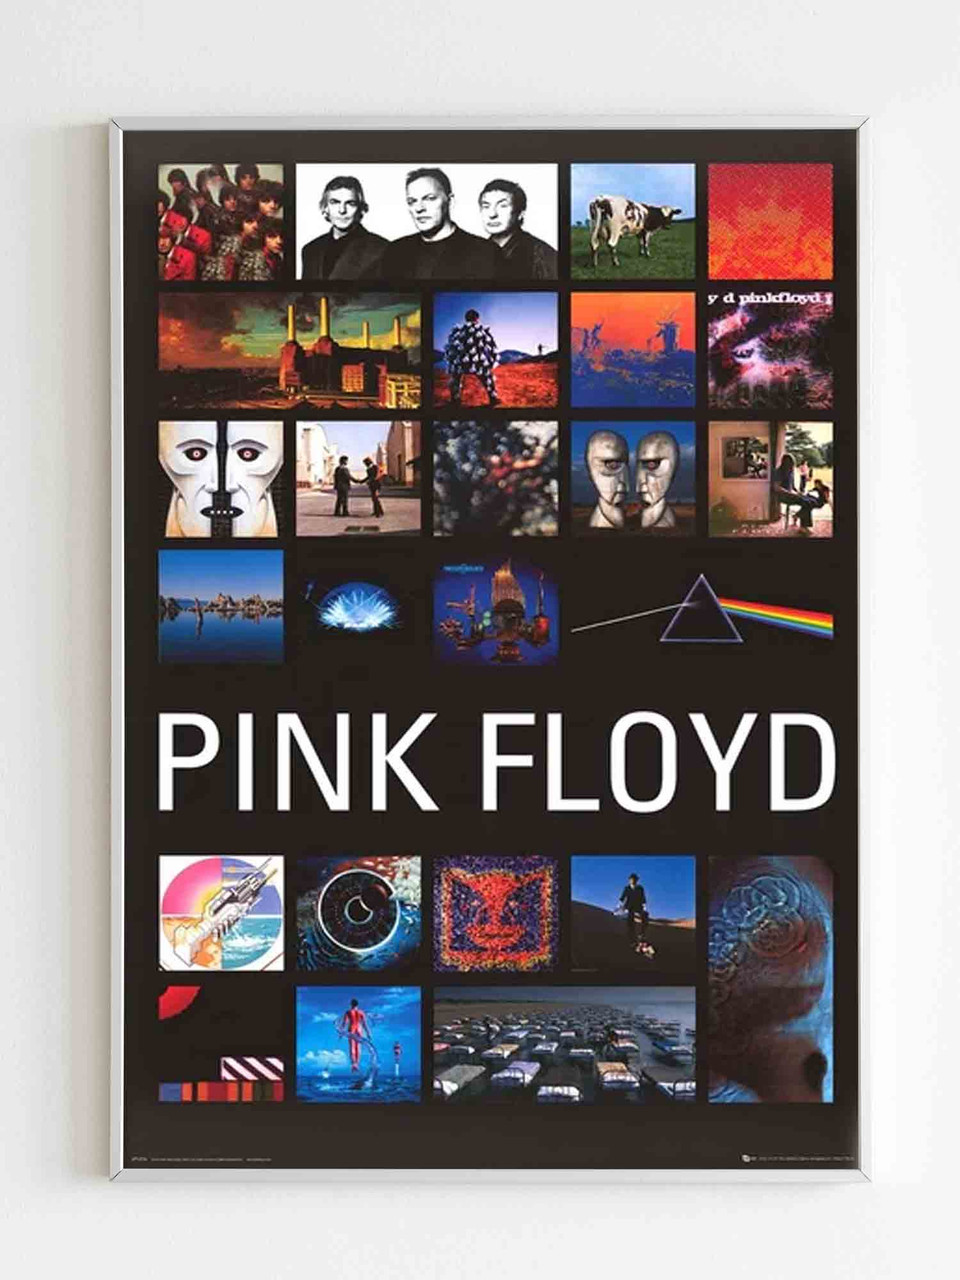 Pink Floyd Album Covers Wallpaper Poster